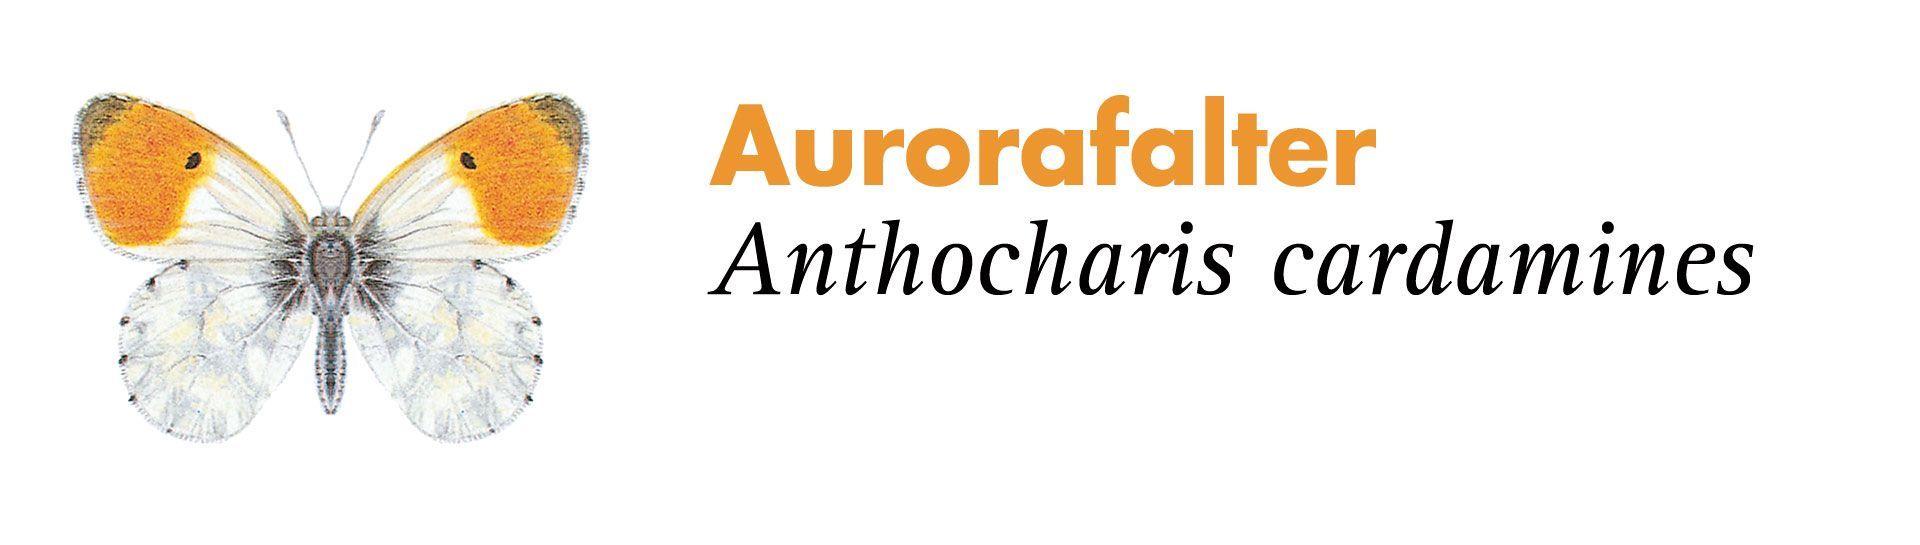 Aurorafalter. Grafik: Haupt Verlag AG